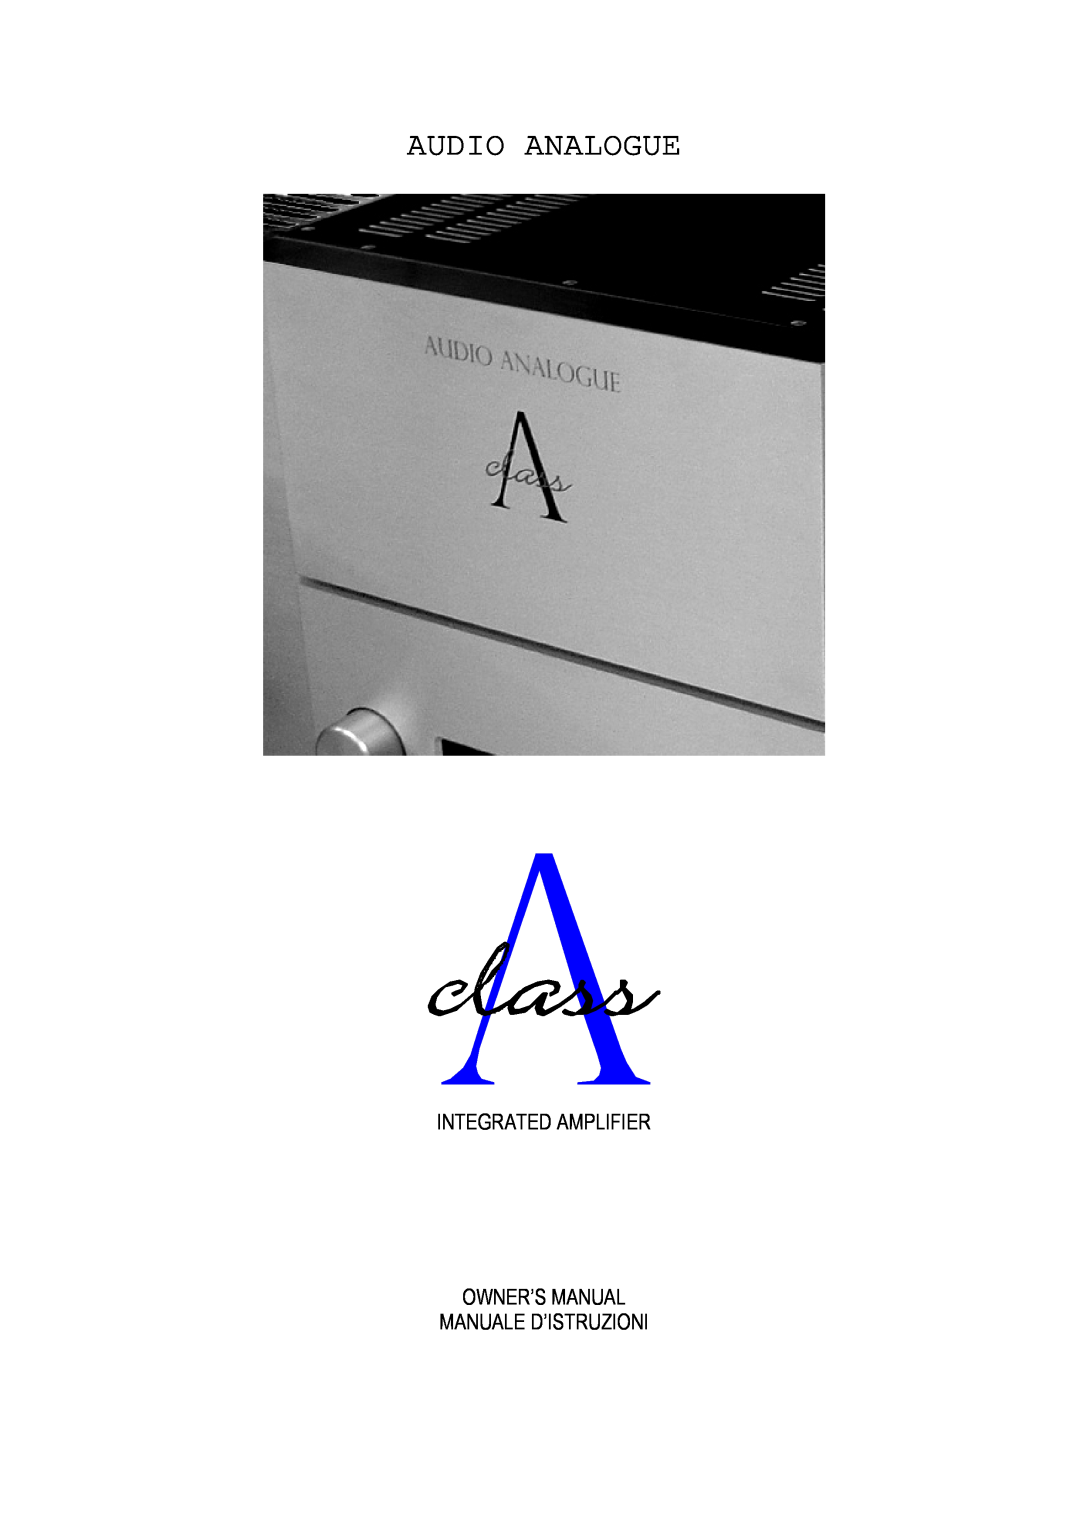 Audio Analogue SRL AUDIO ANALOGUE INTEGRATED AMPLIFIER owner manual Audio Analogue, Integrated Amplifier 